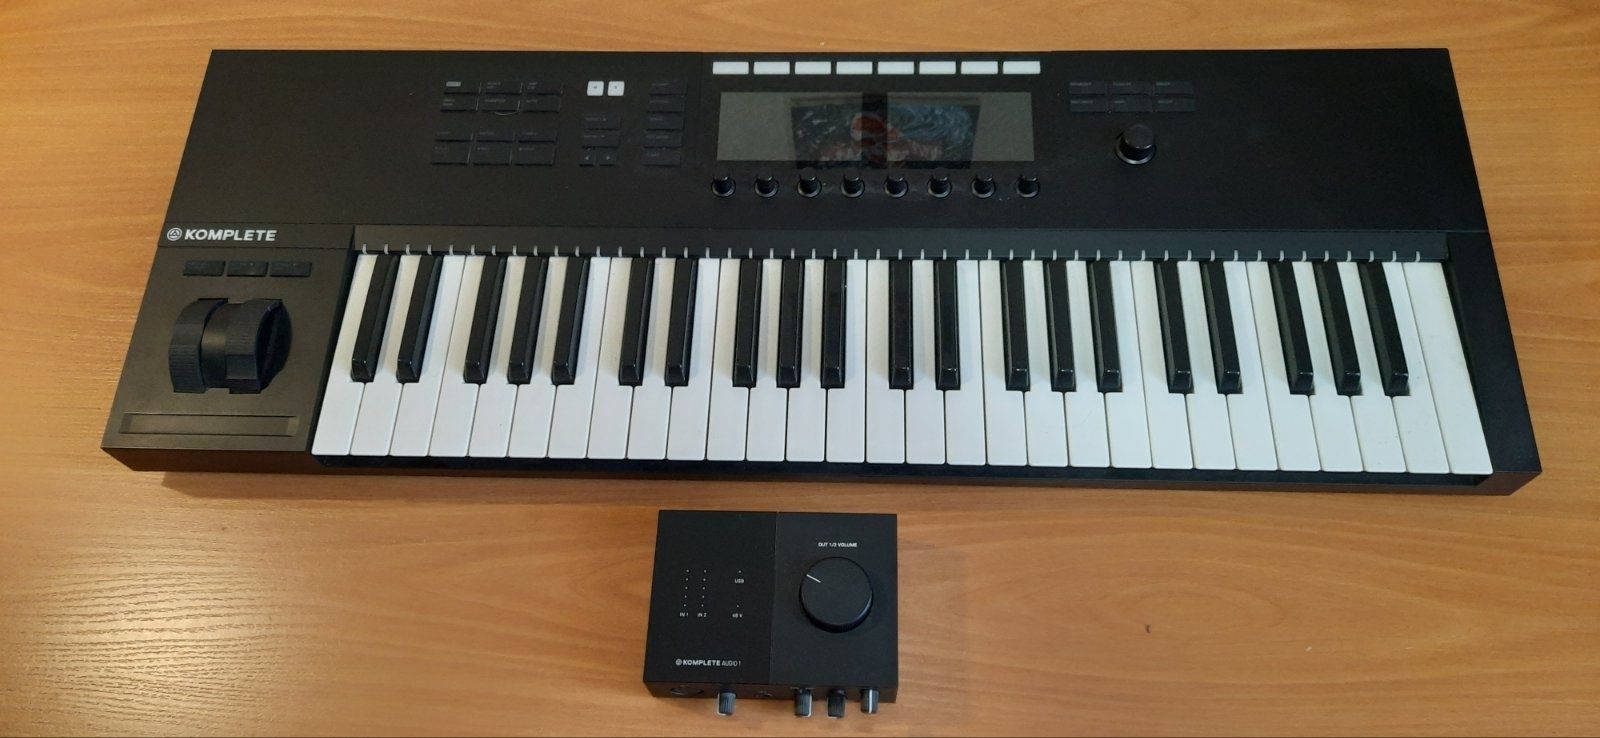 MIDI клавиатура Komplete Kontrol S 49